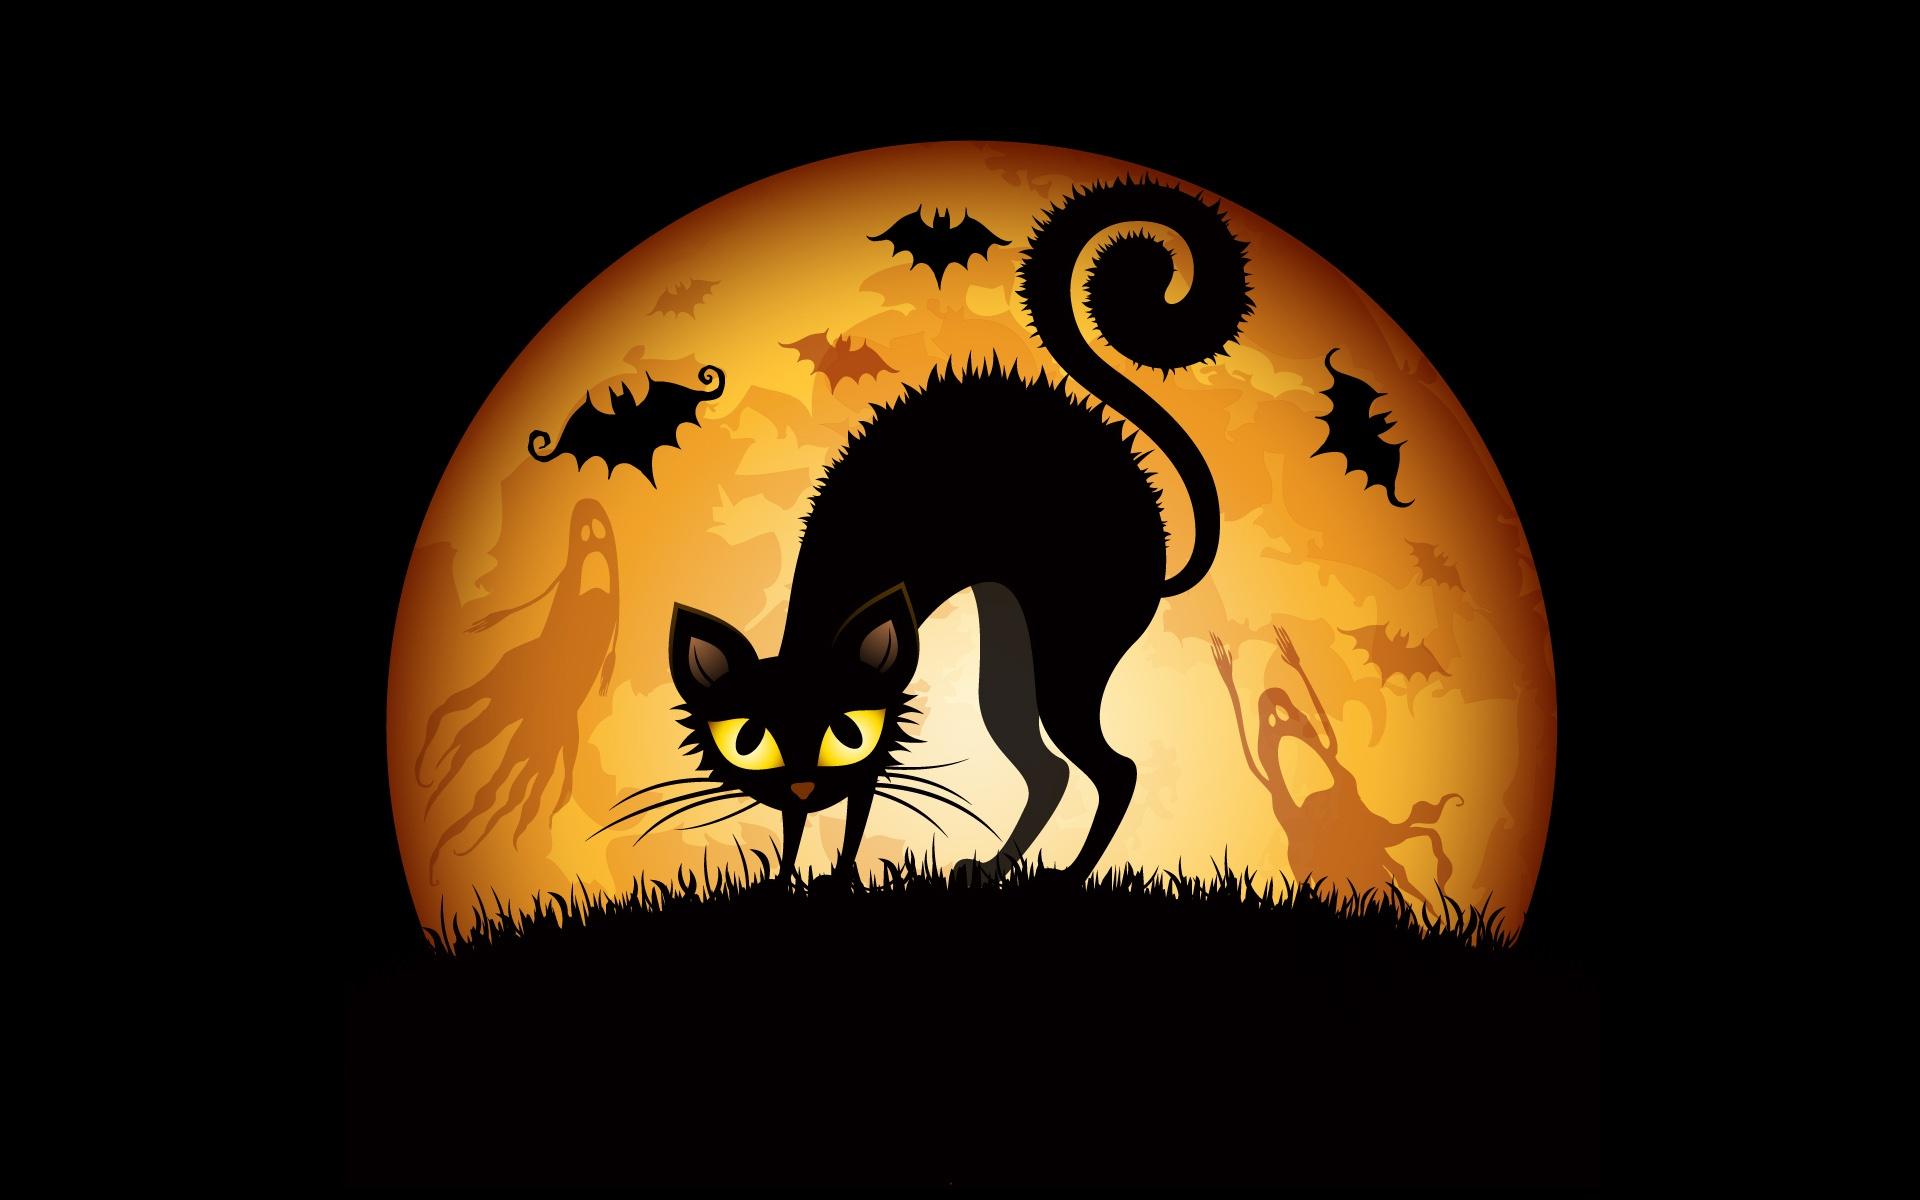 Halloween Cats Bats Wallpaper in jpg format for free download